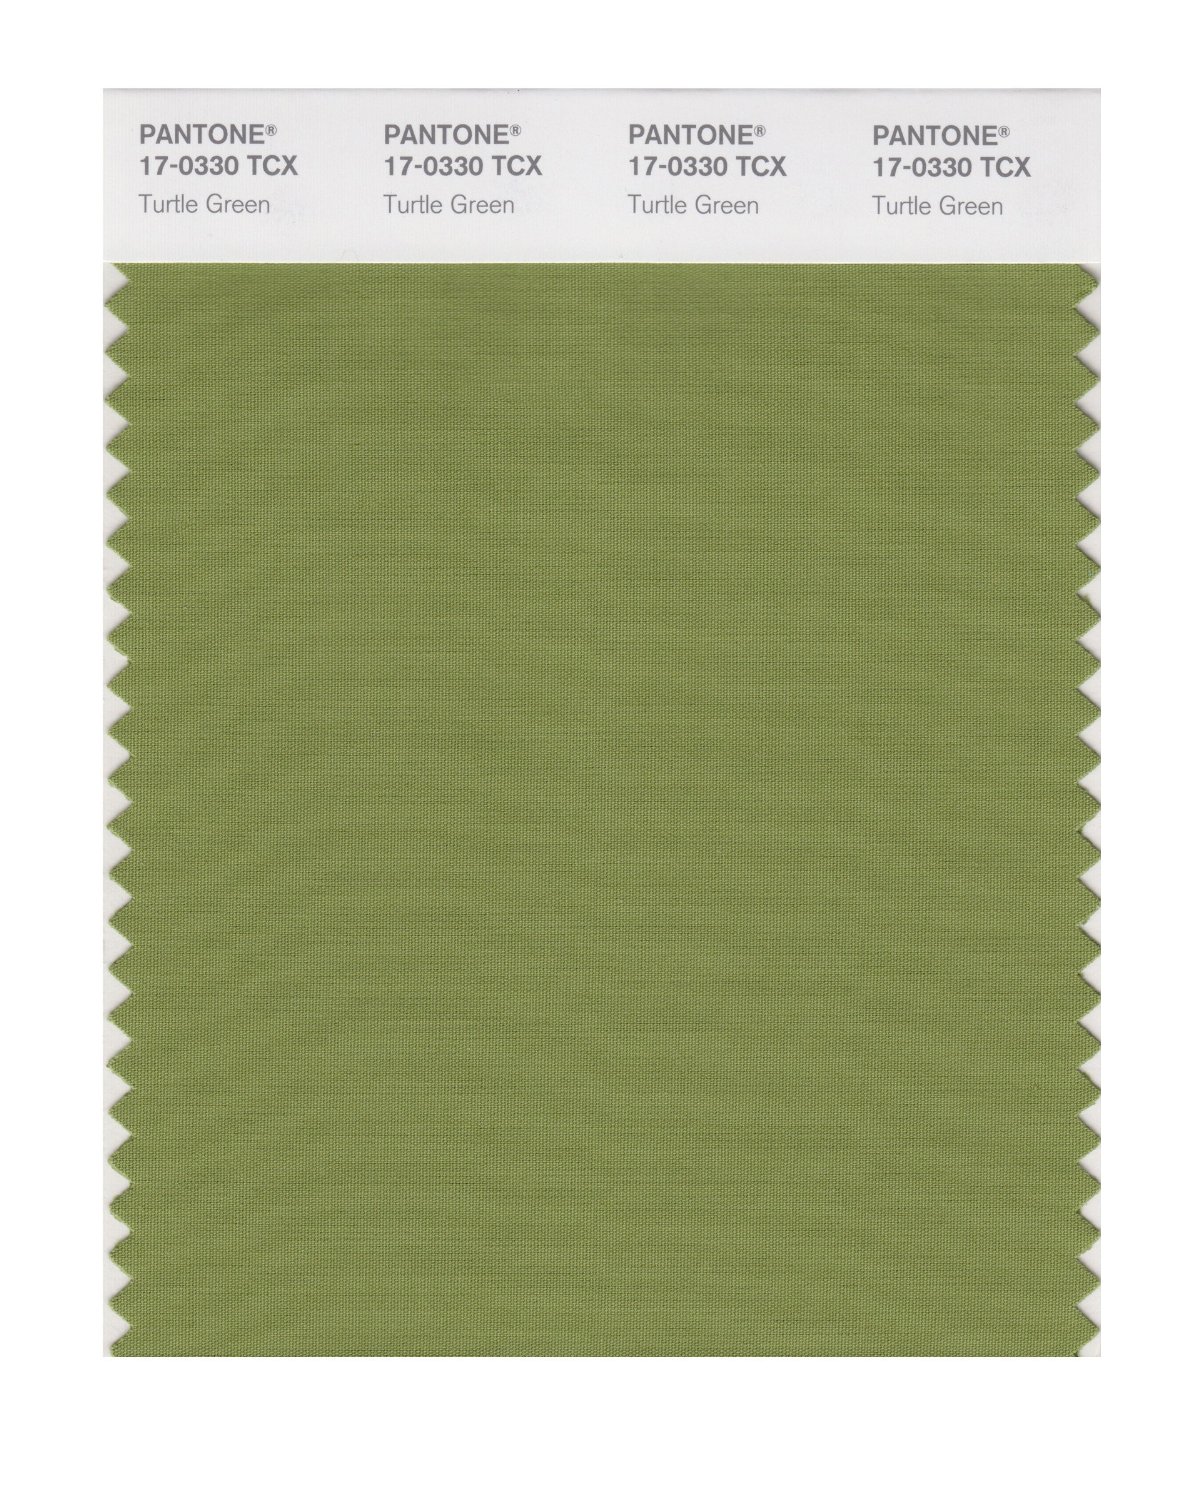 Pantone Cotton Swatch 17-0330 Turtle Green